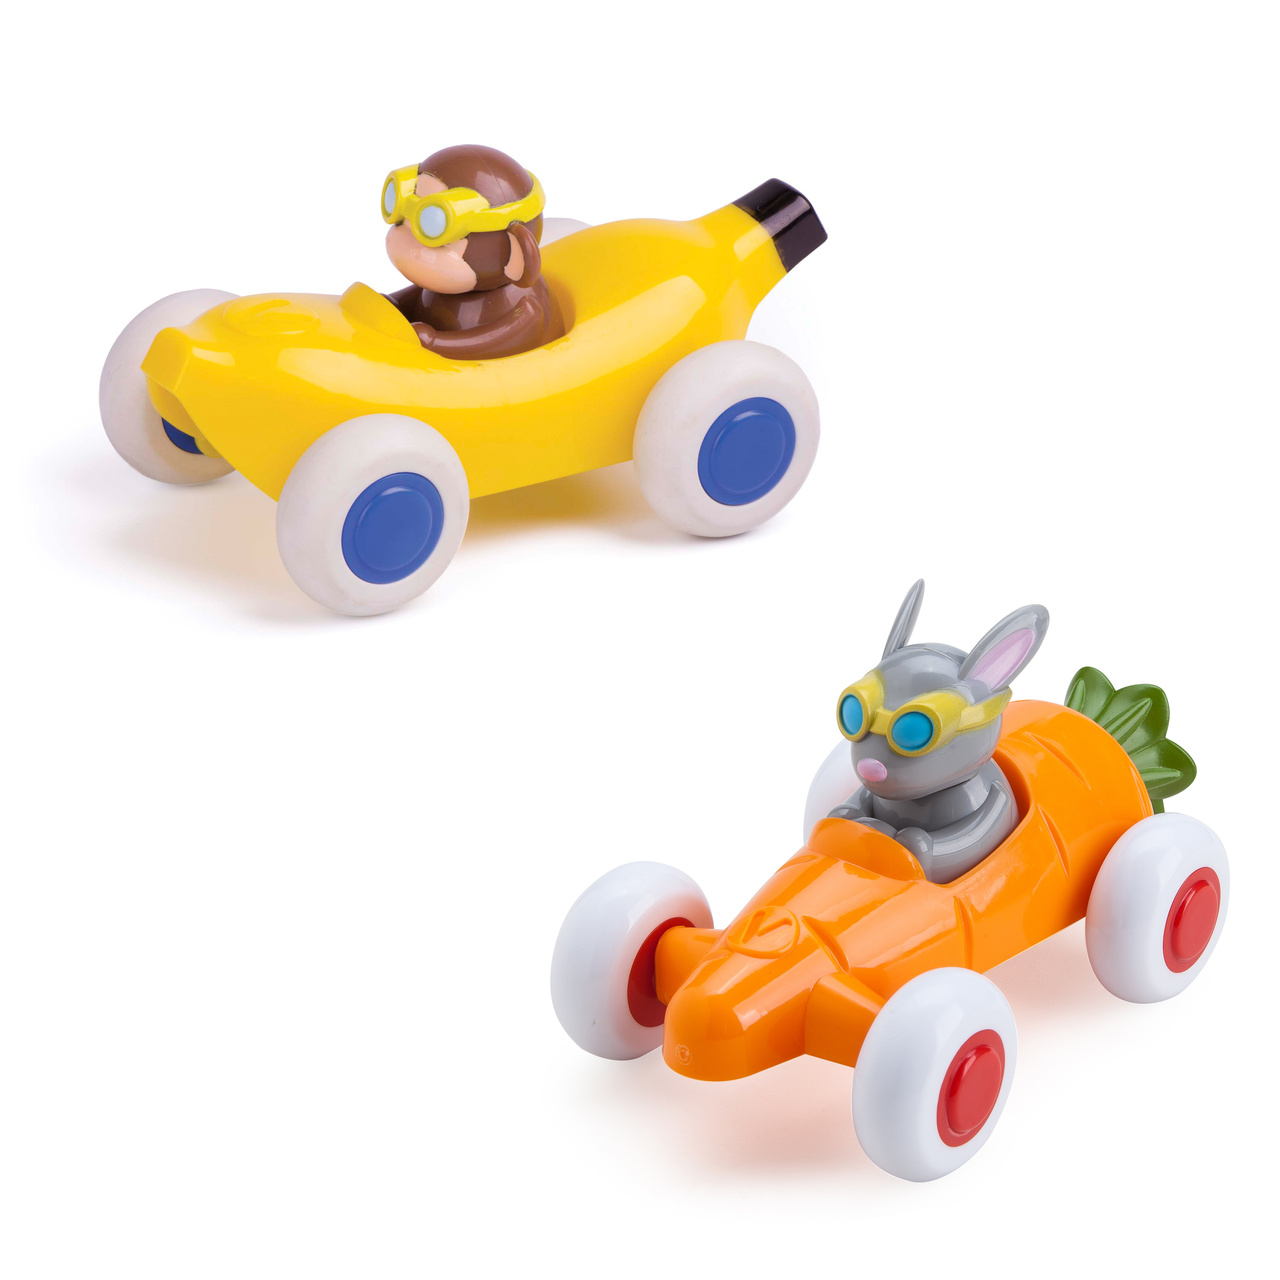 Cute Racer Duo set